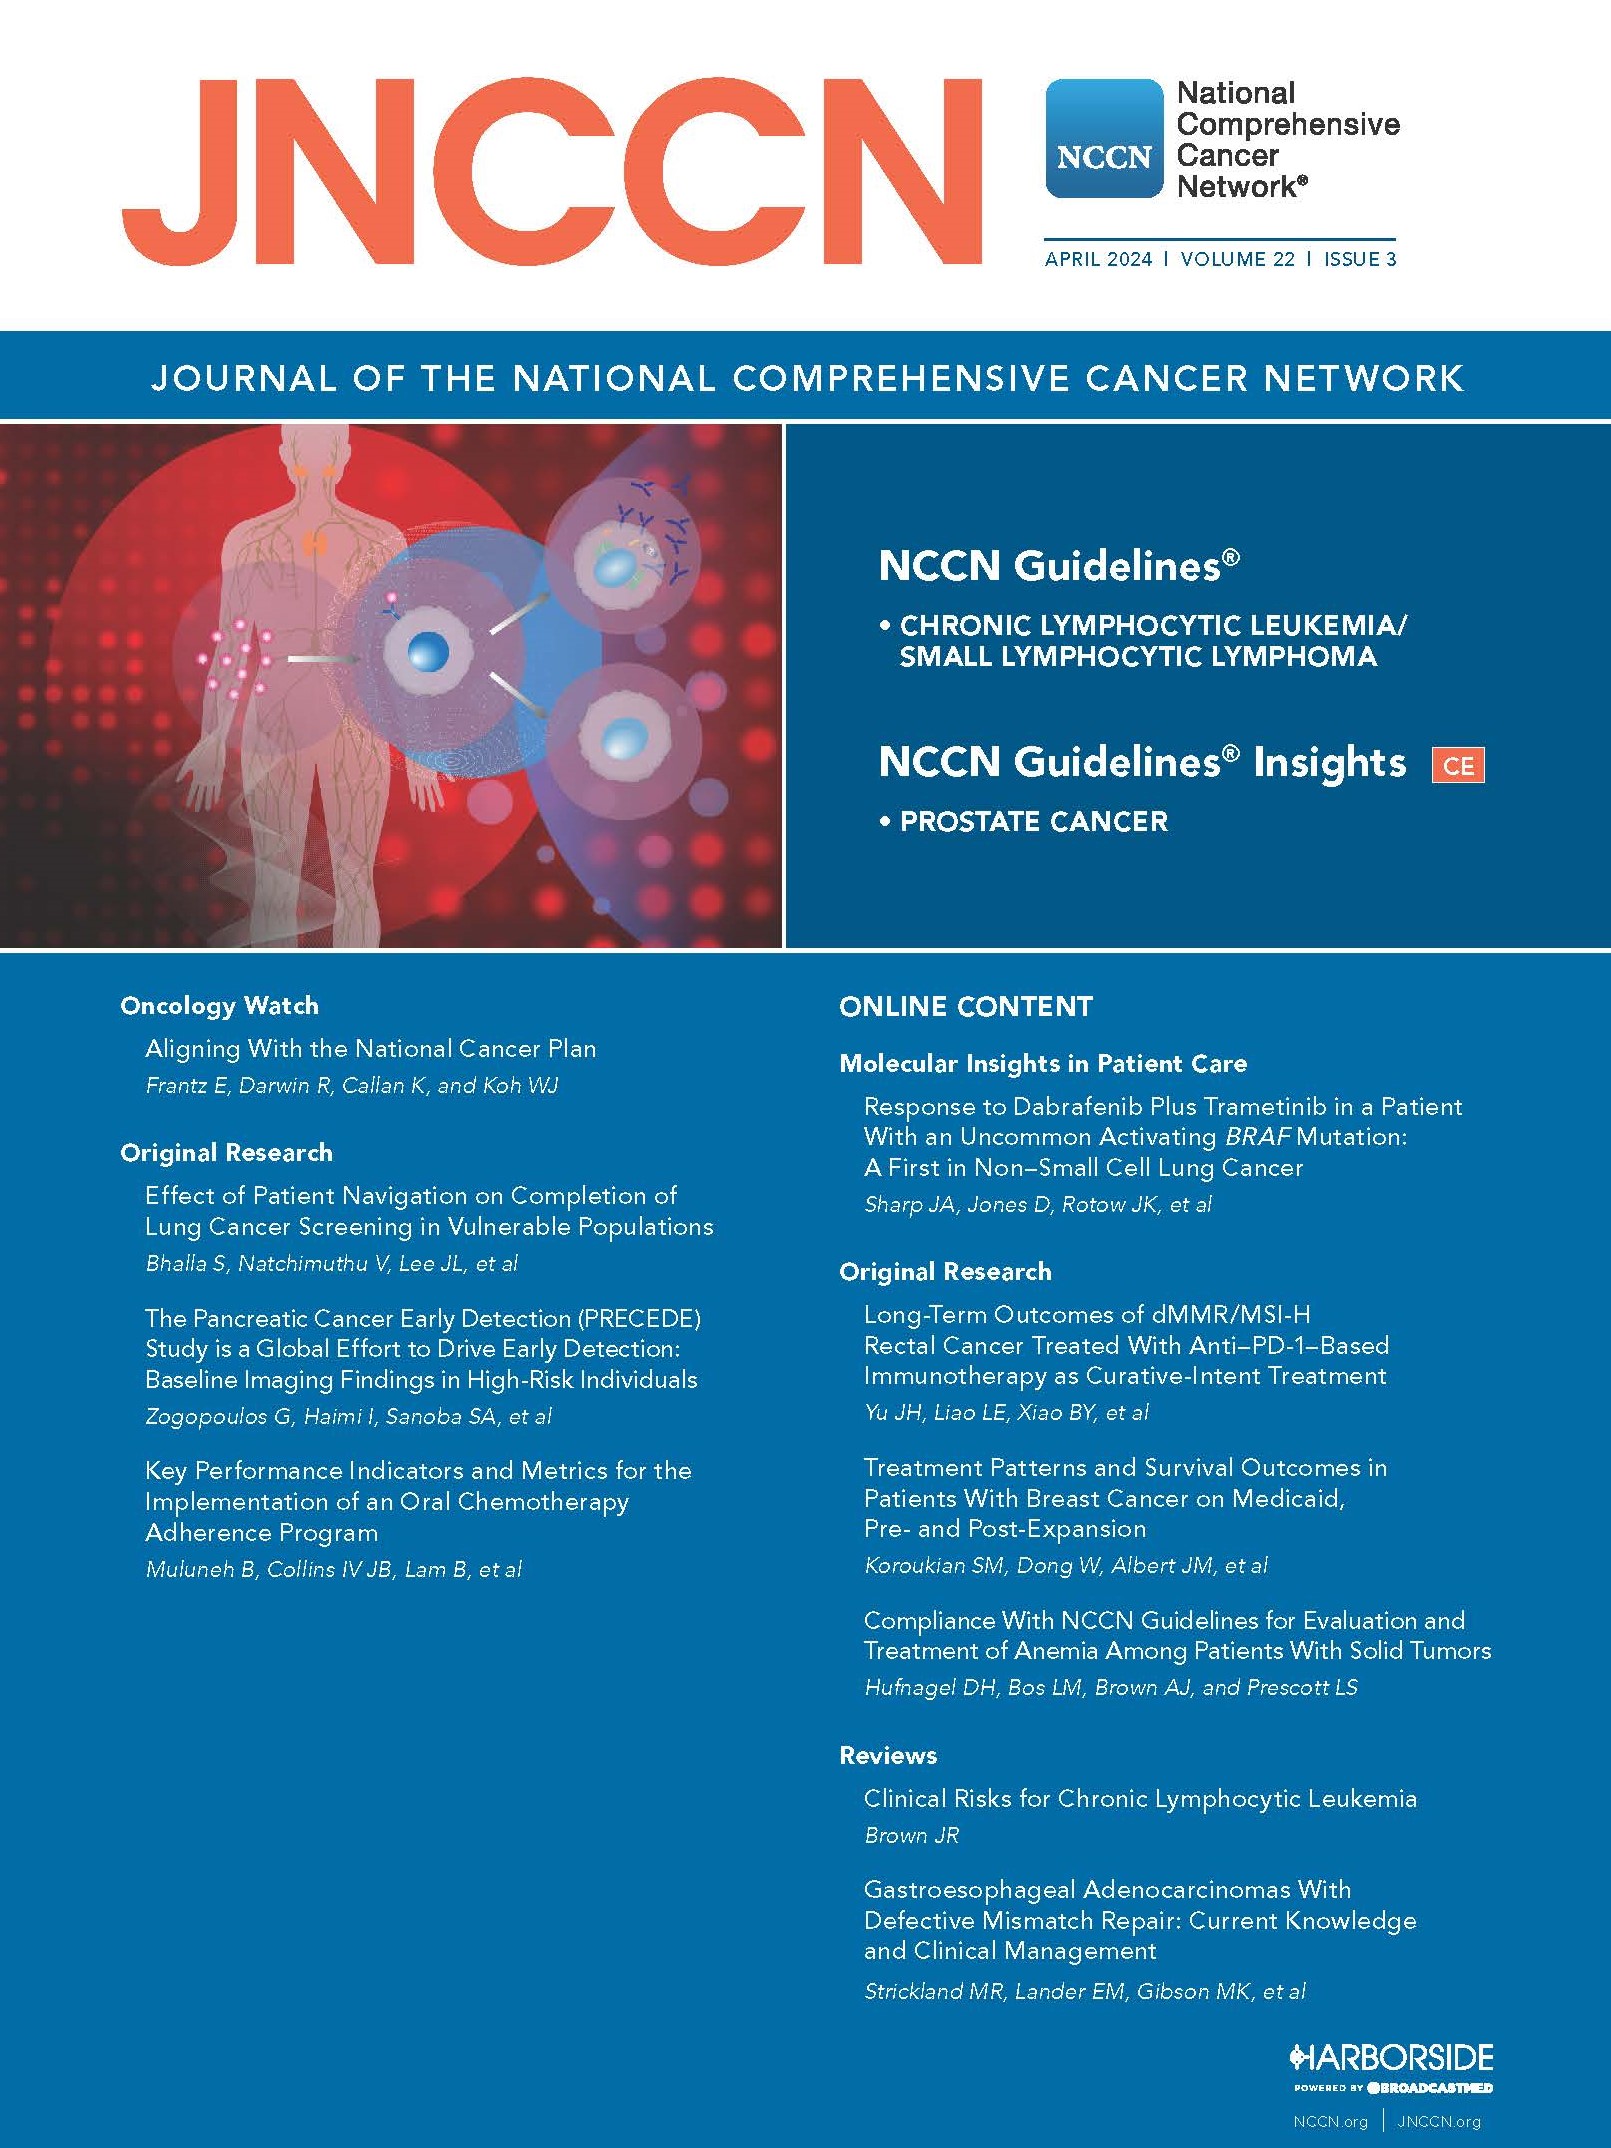 JNCCN Cover, April 2024